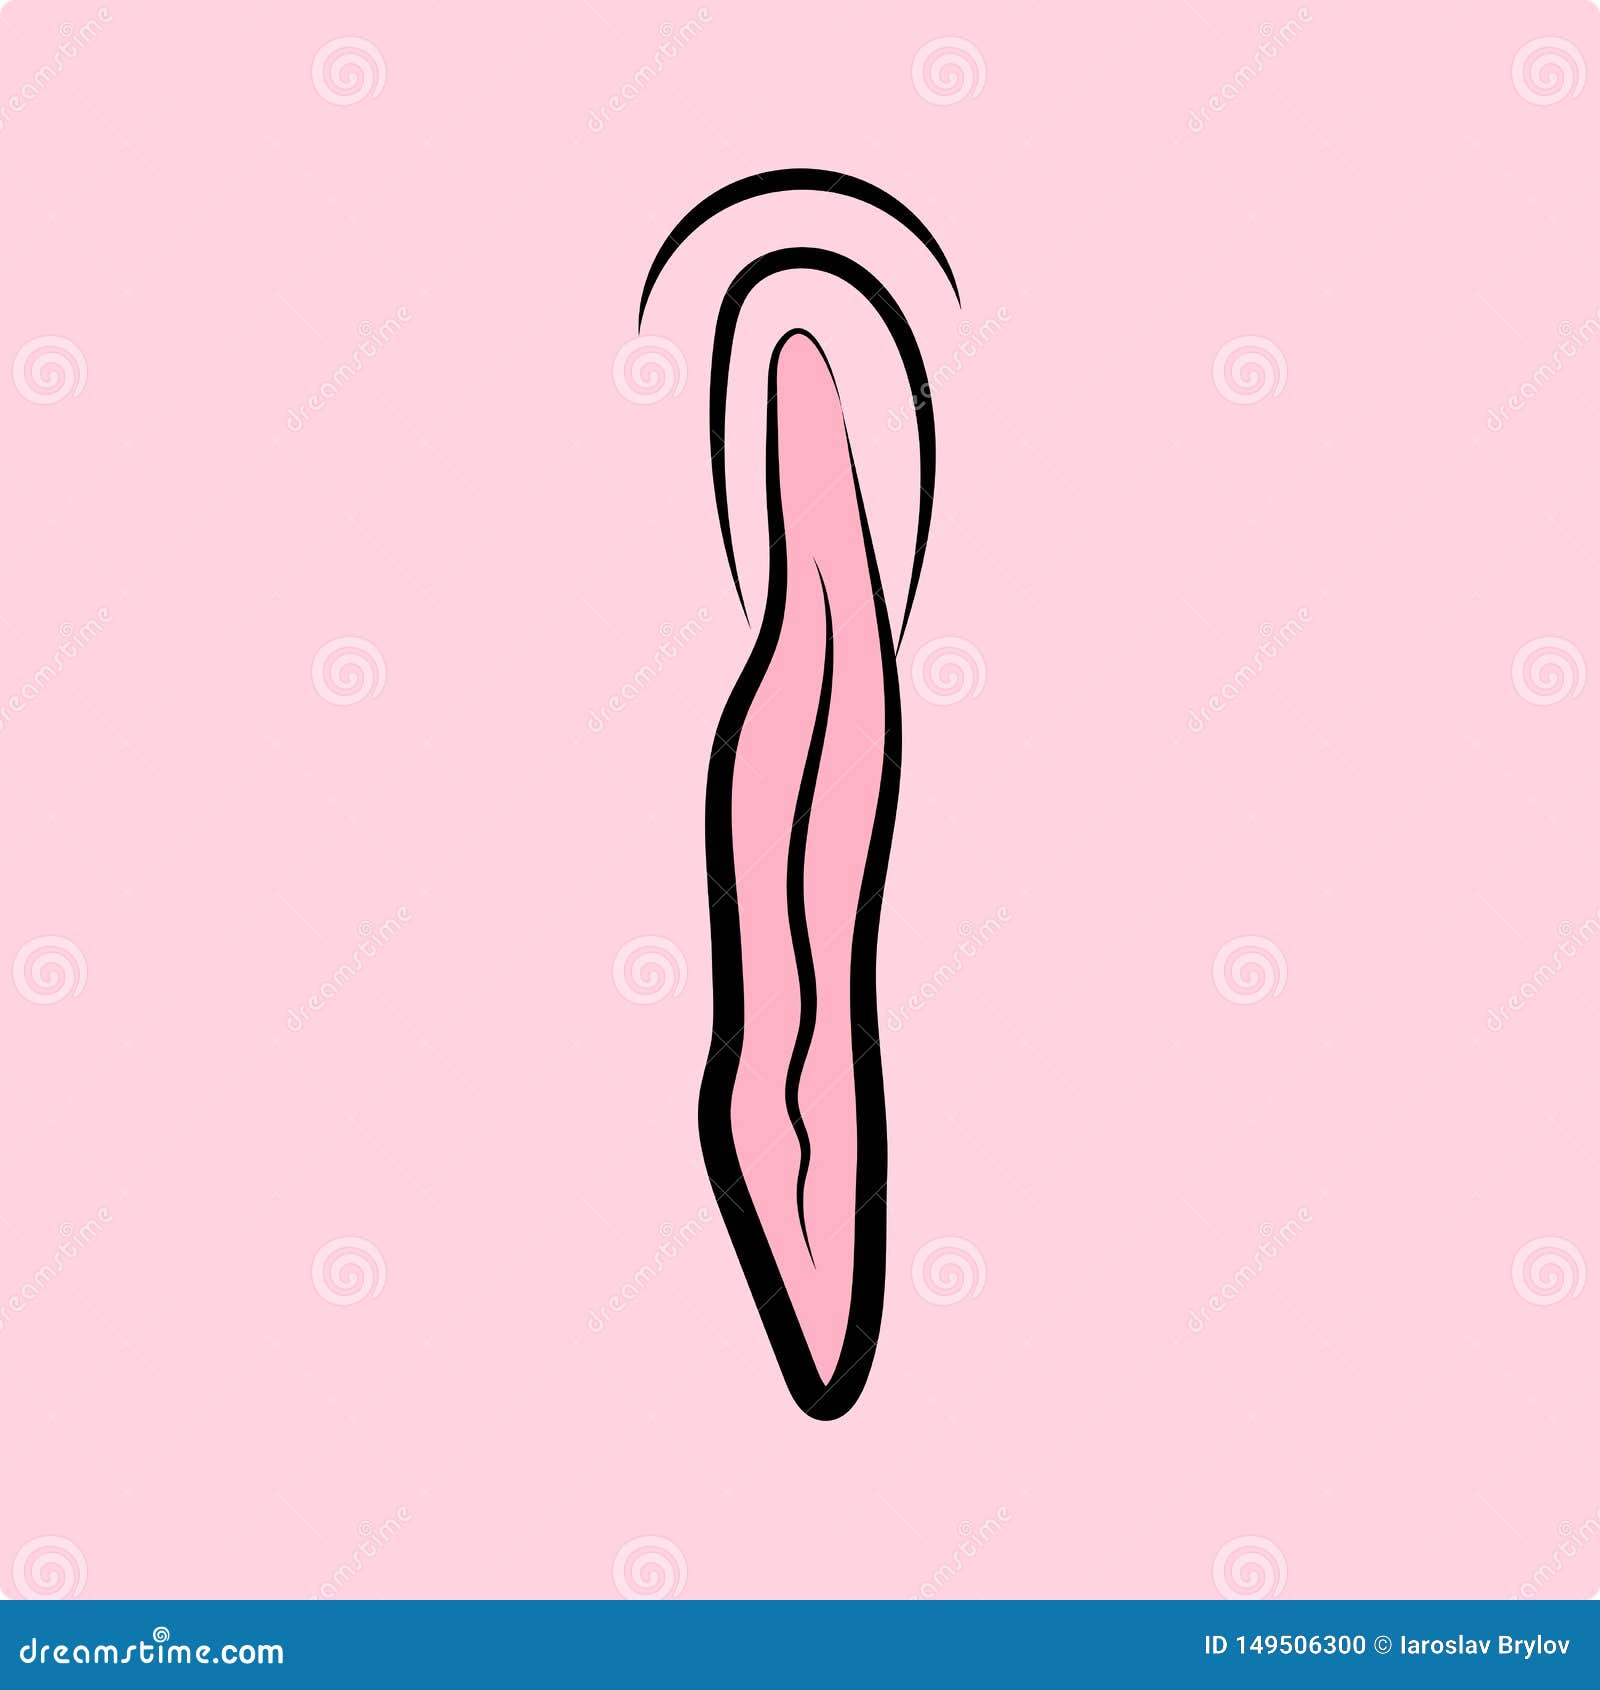 Human Vagina Vaginal Opening Or Female Reproductive Sex Organ Line Art